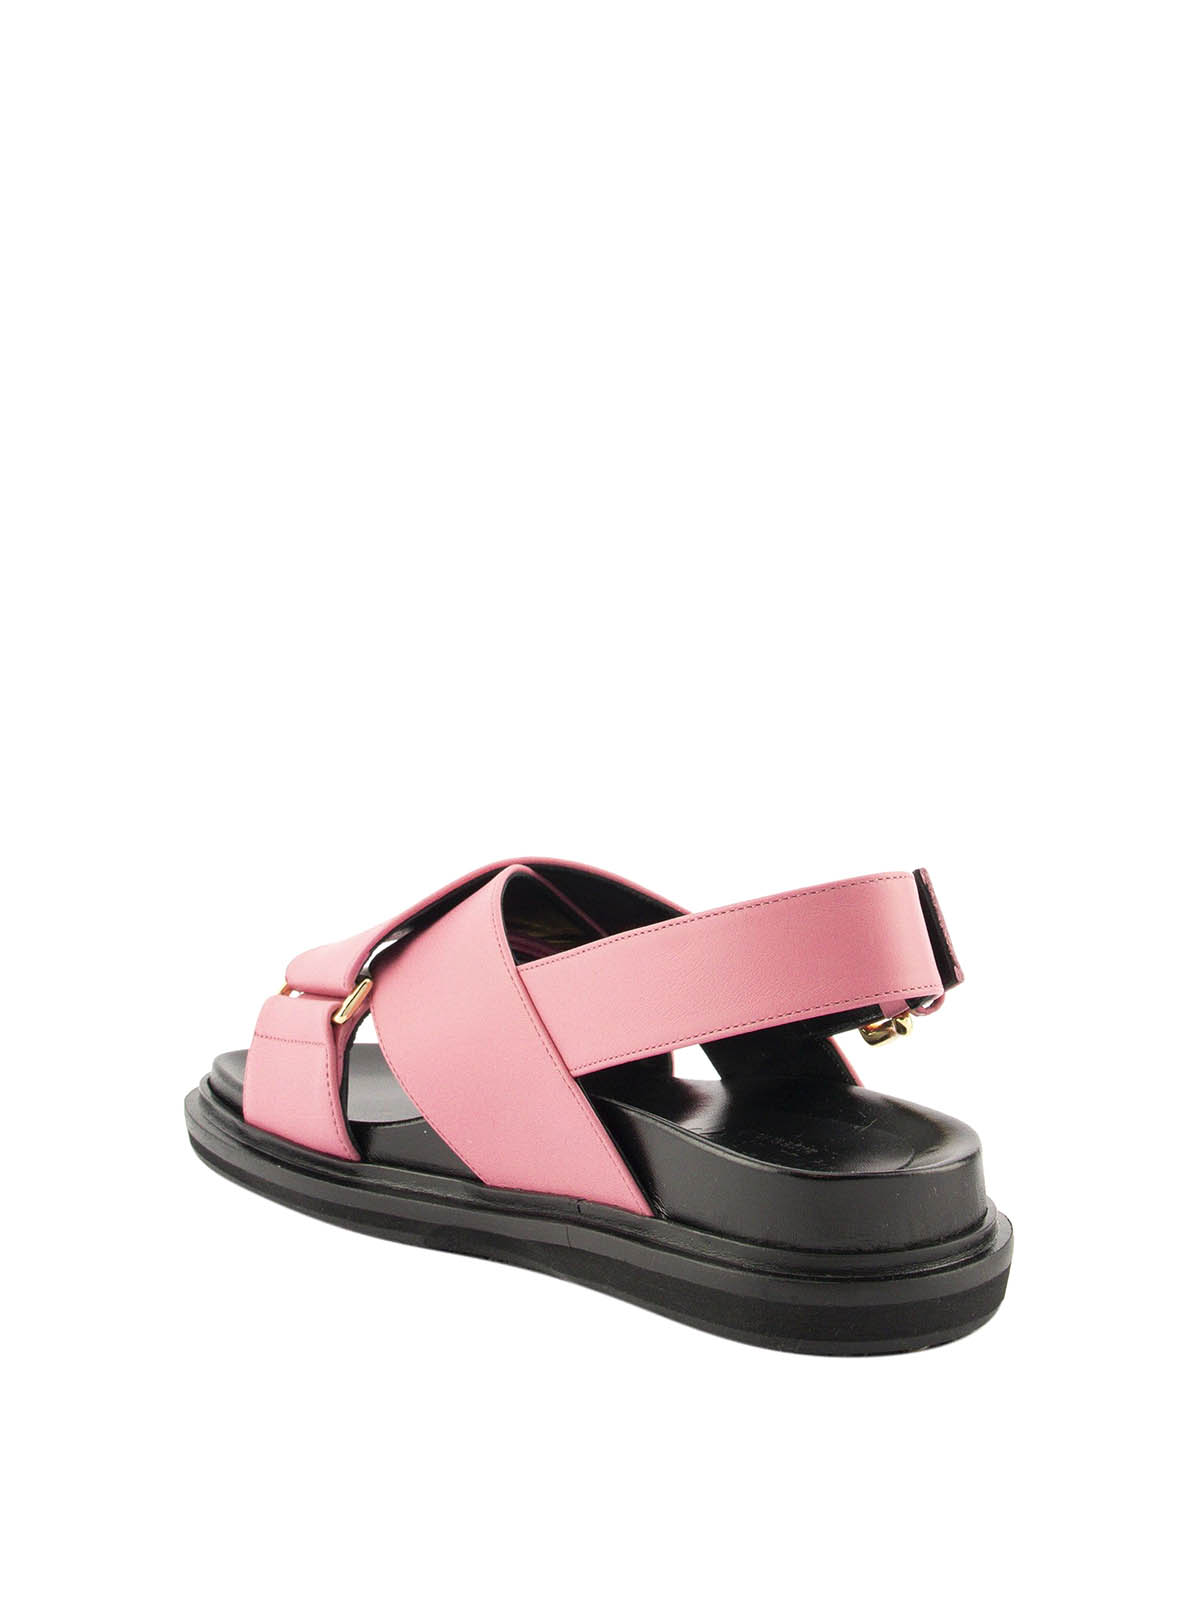 Sandals Marni - Criss-cross leather sandals - FBMS005201LV81700C53